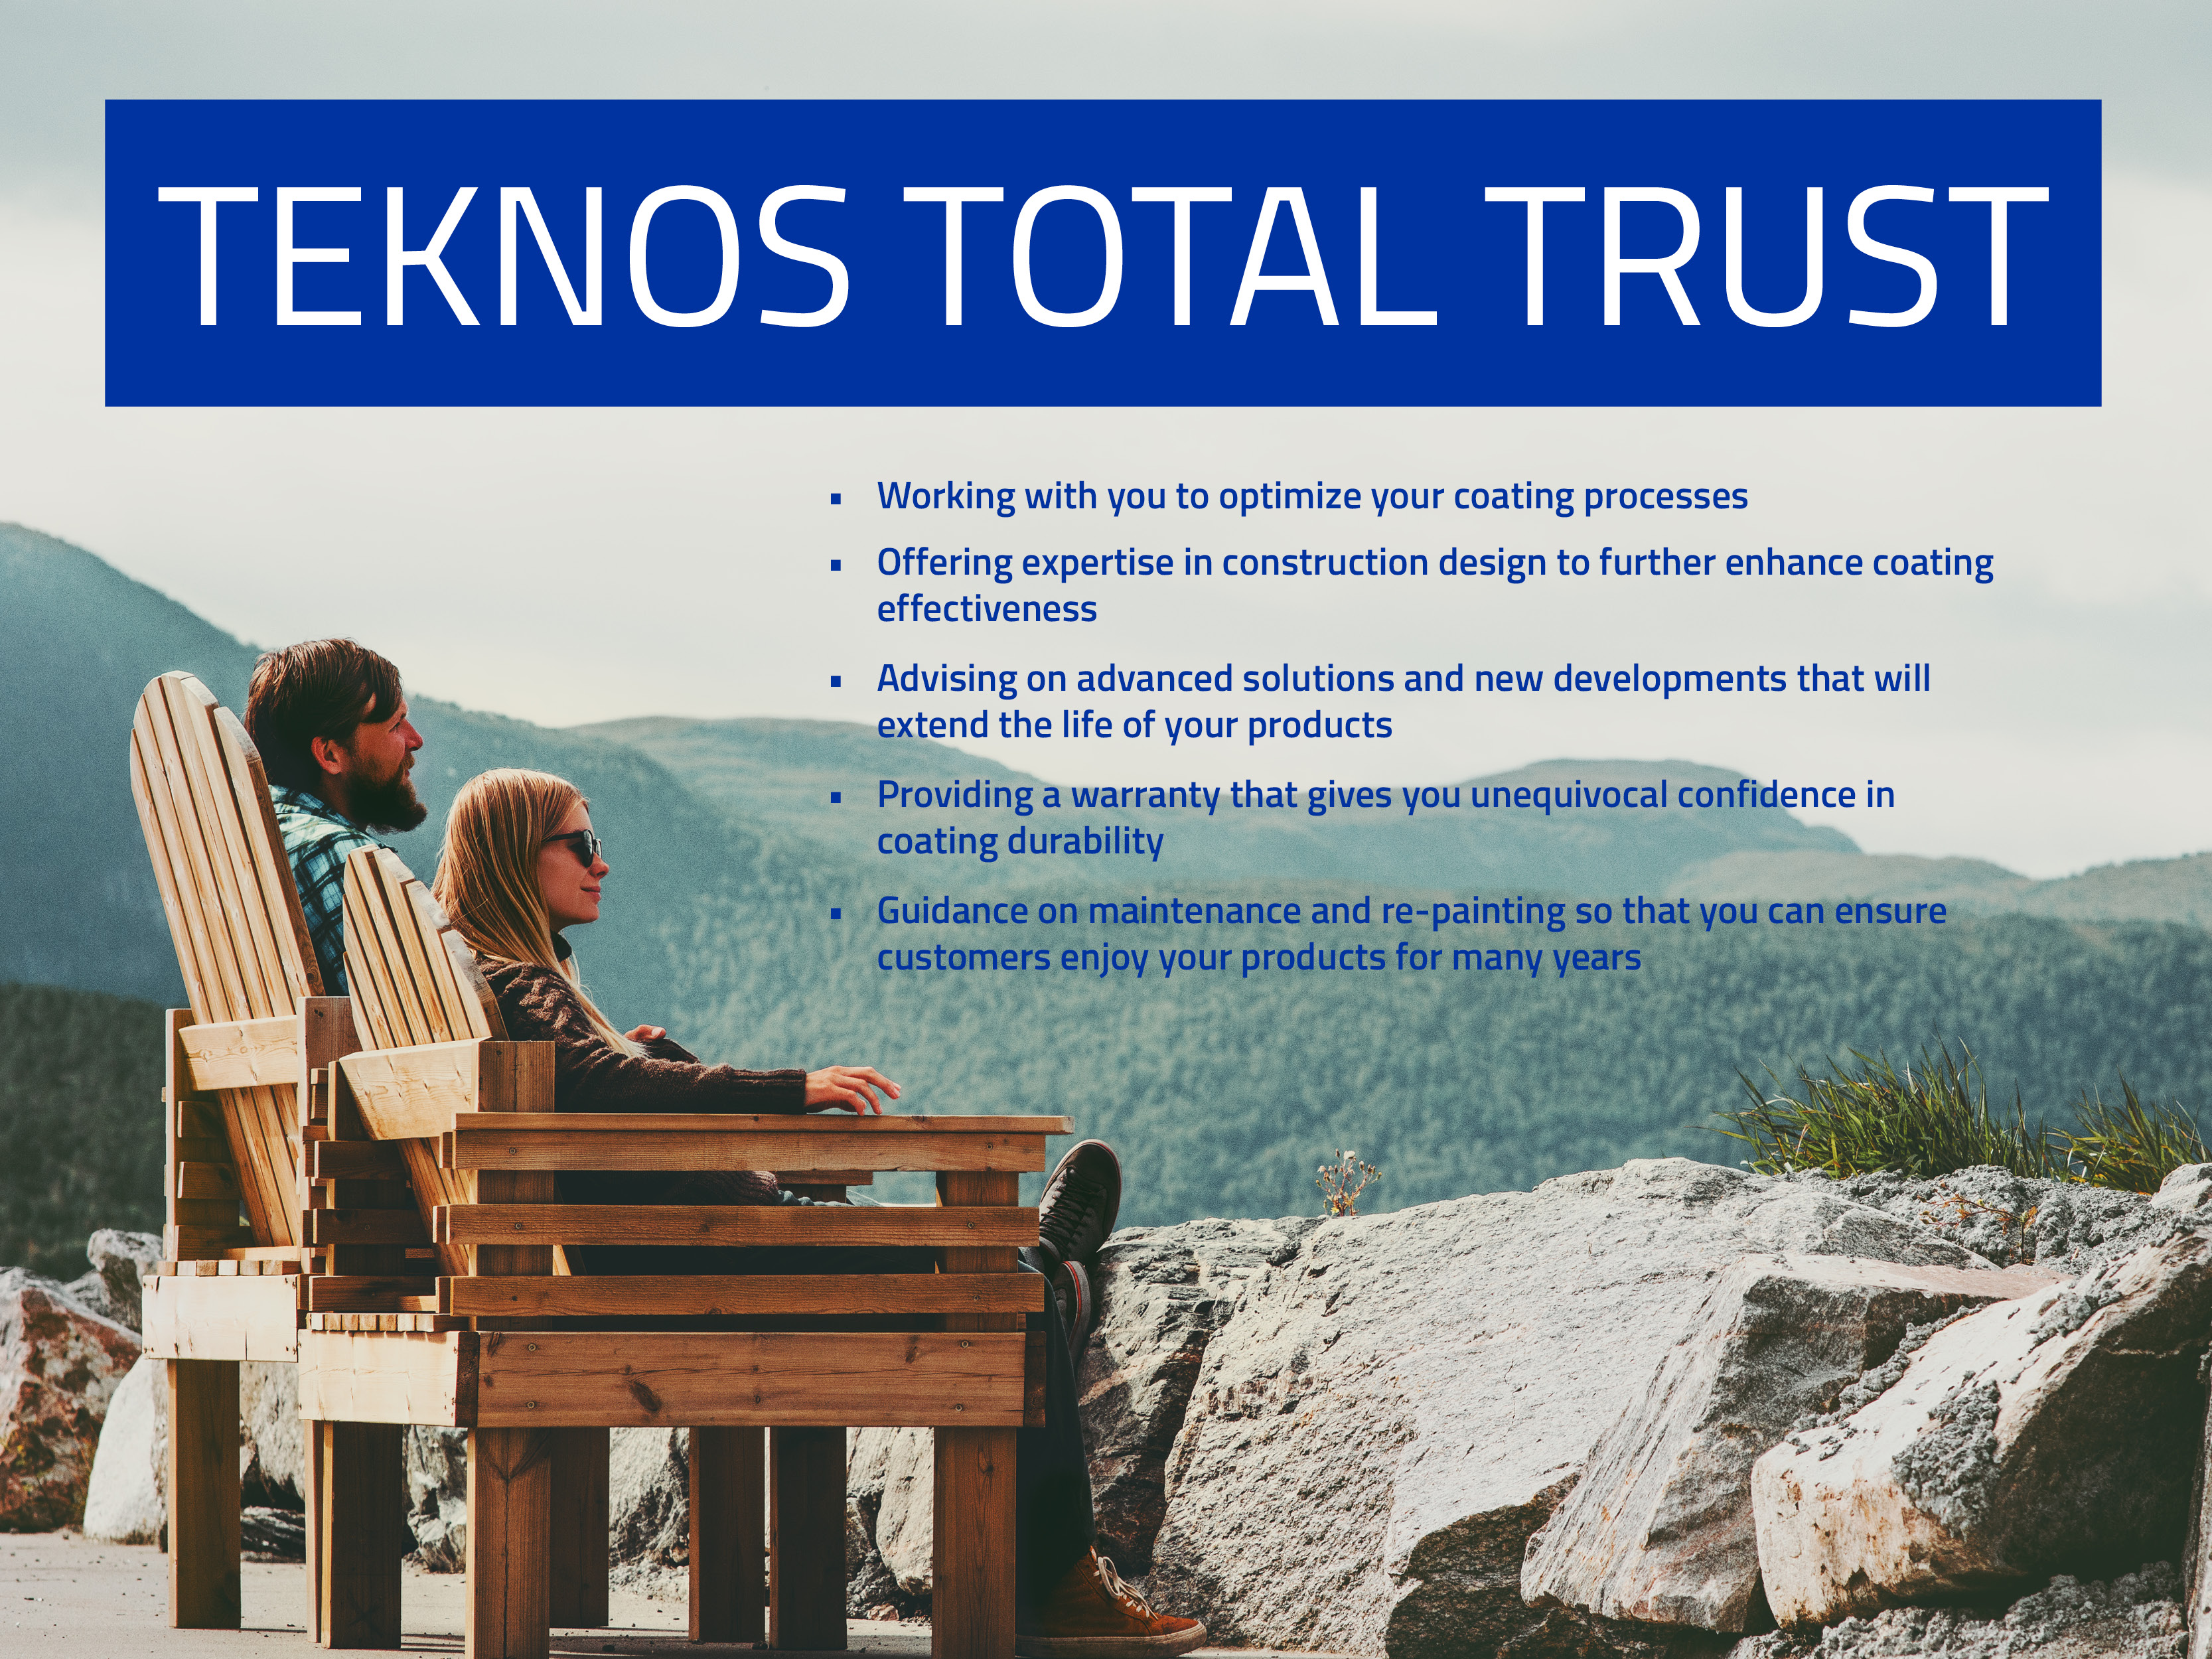 Teknos Total Trust benefits